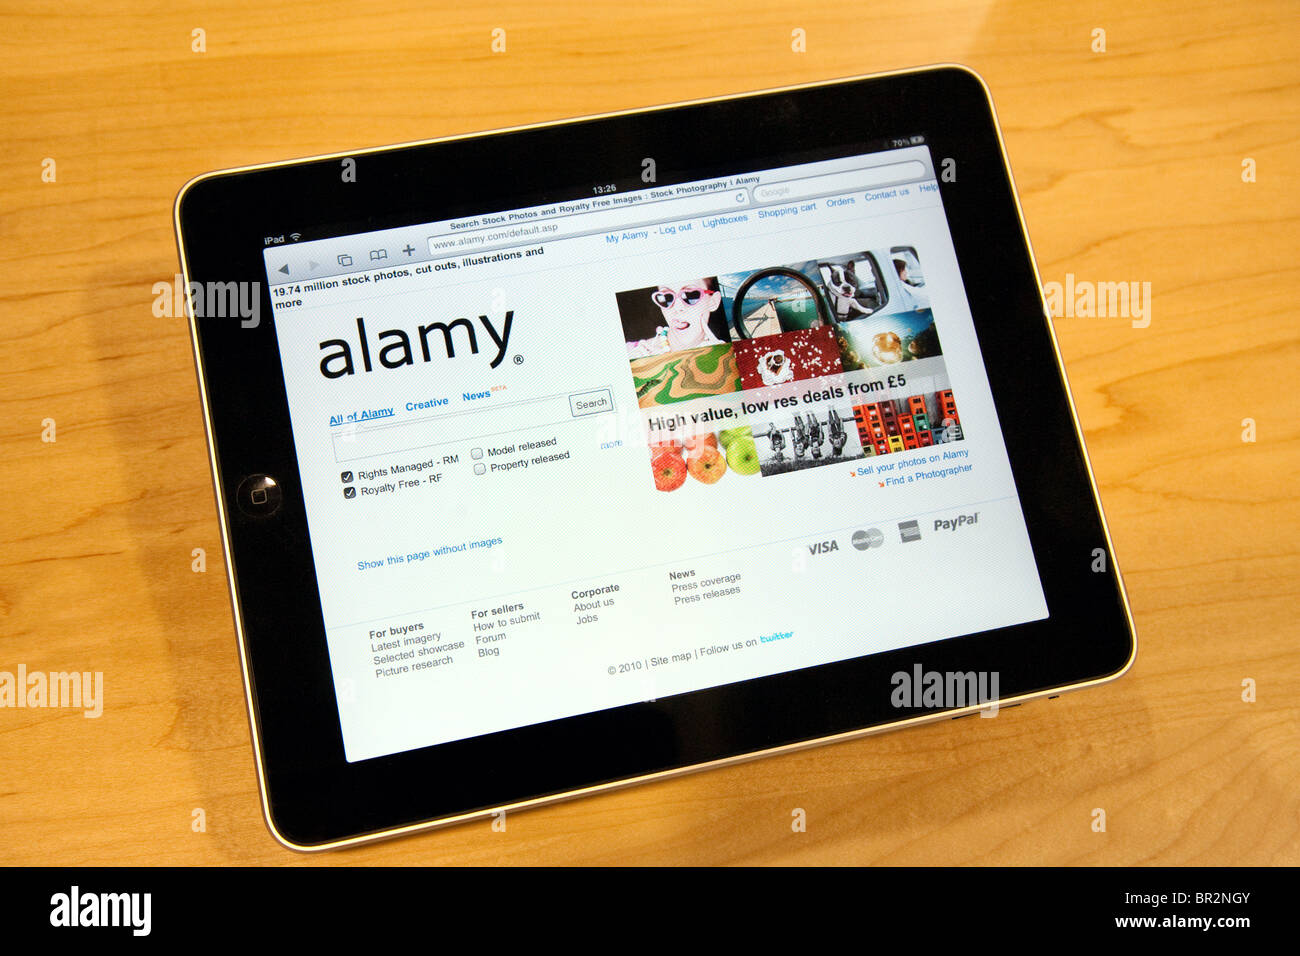 An Apple iPad showing the Alamy homepage, PC World, Cambridge UK Stock Photo